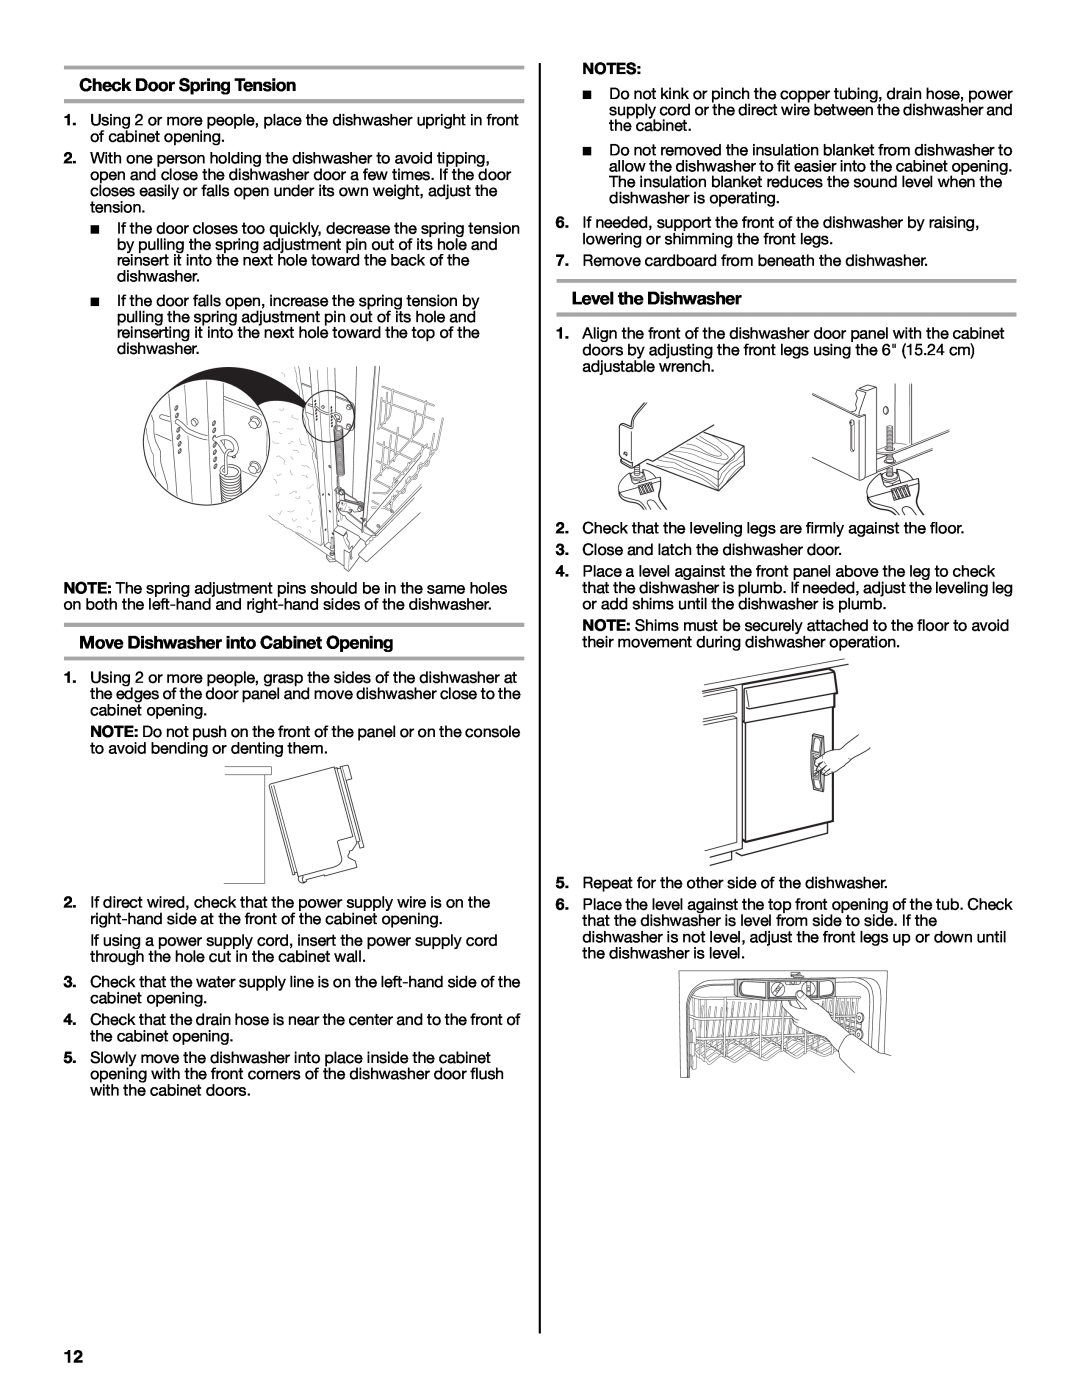 Whirlpool GU3100XTVB, GU3100XTVQ Check Door Spring Tension, Move Dishwasher into Cabinet Opening, Level the Dishwasher 